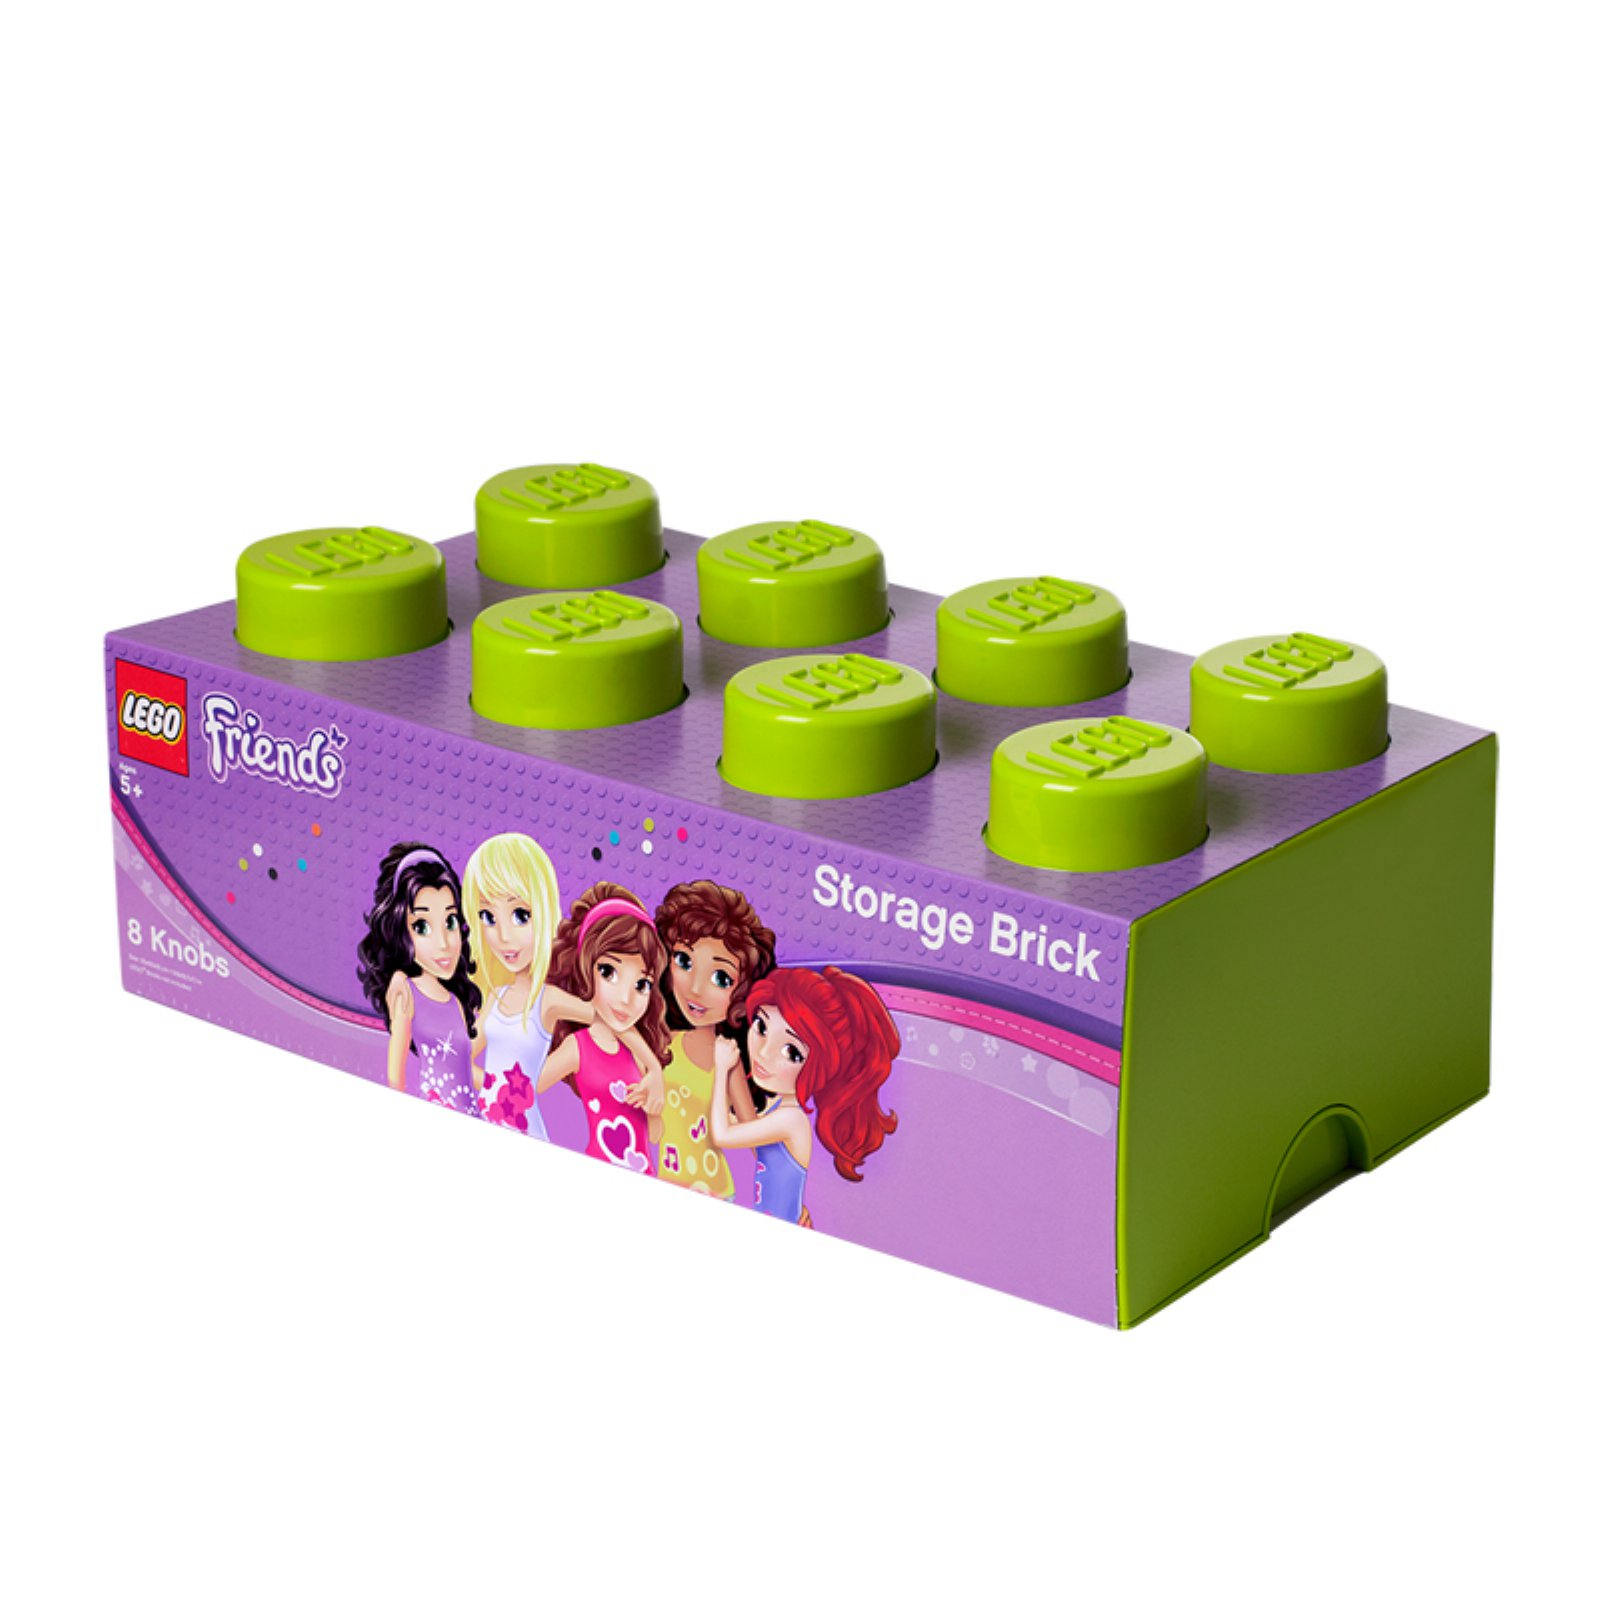 Lego Friends Storage Brick 8 Toy Box Walmart throughout proportions 1600 X 1600